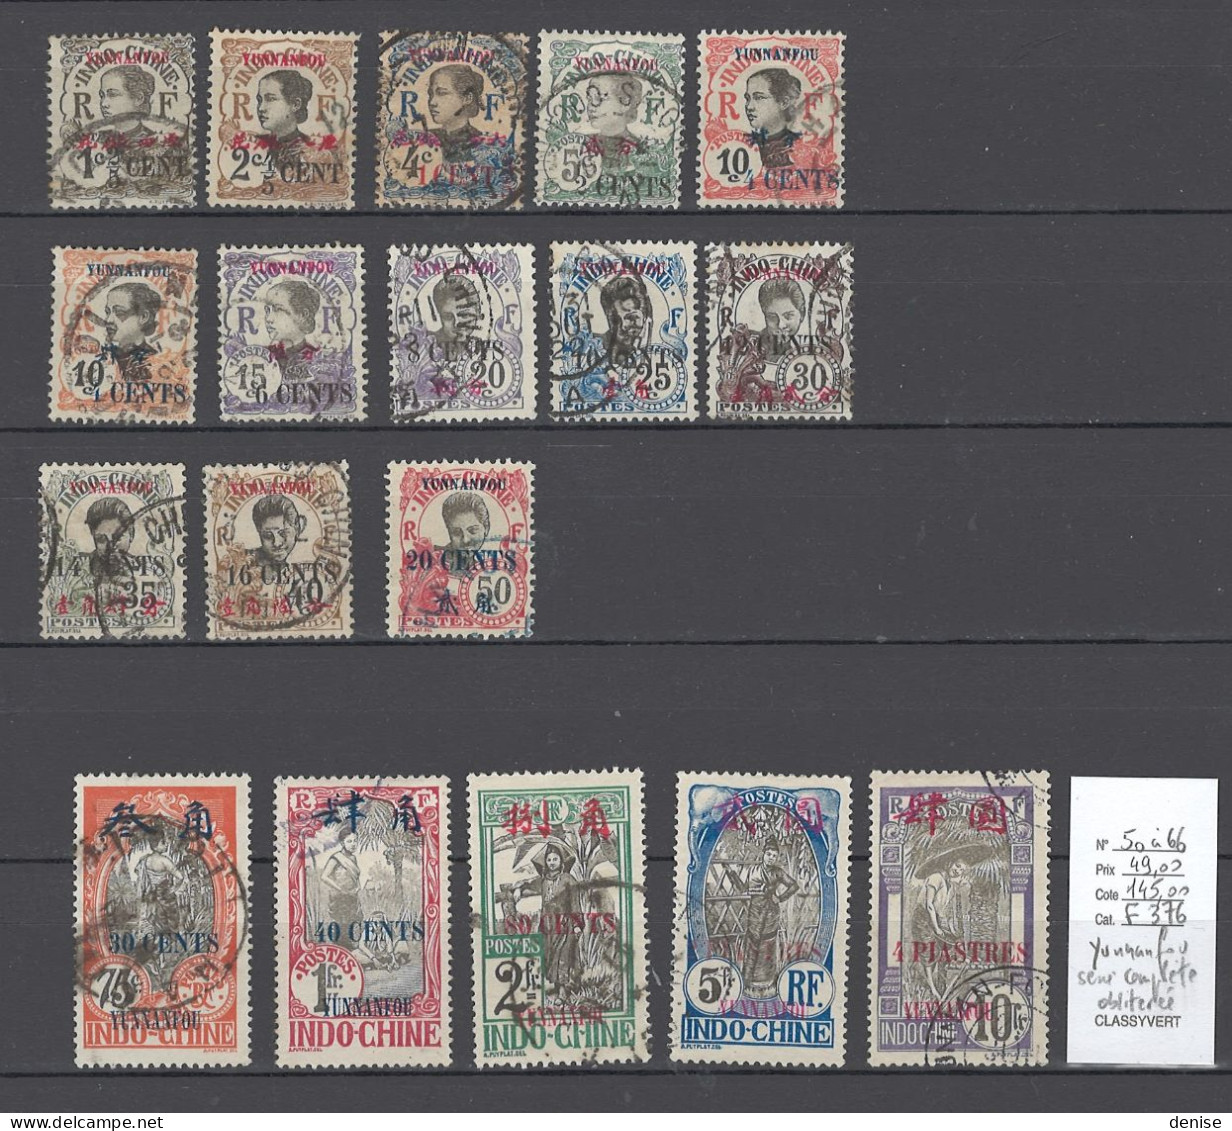 Yunnanfou - Chine Française - Yvert 50 à 66 - Oblitérés - Used Stamps